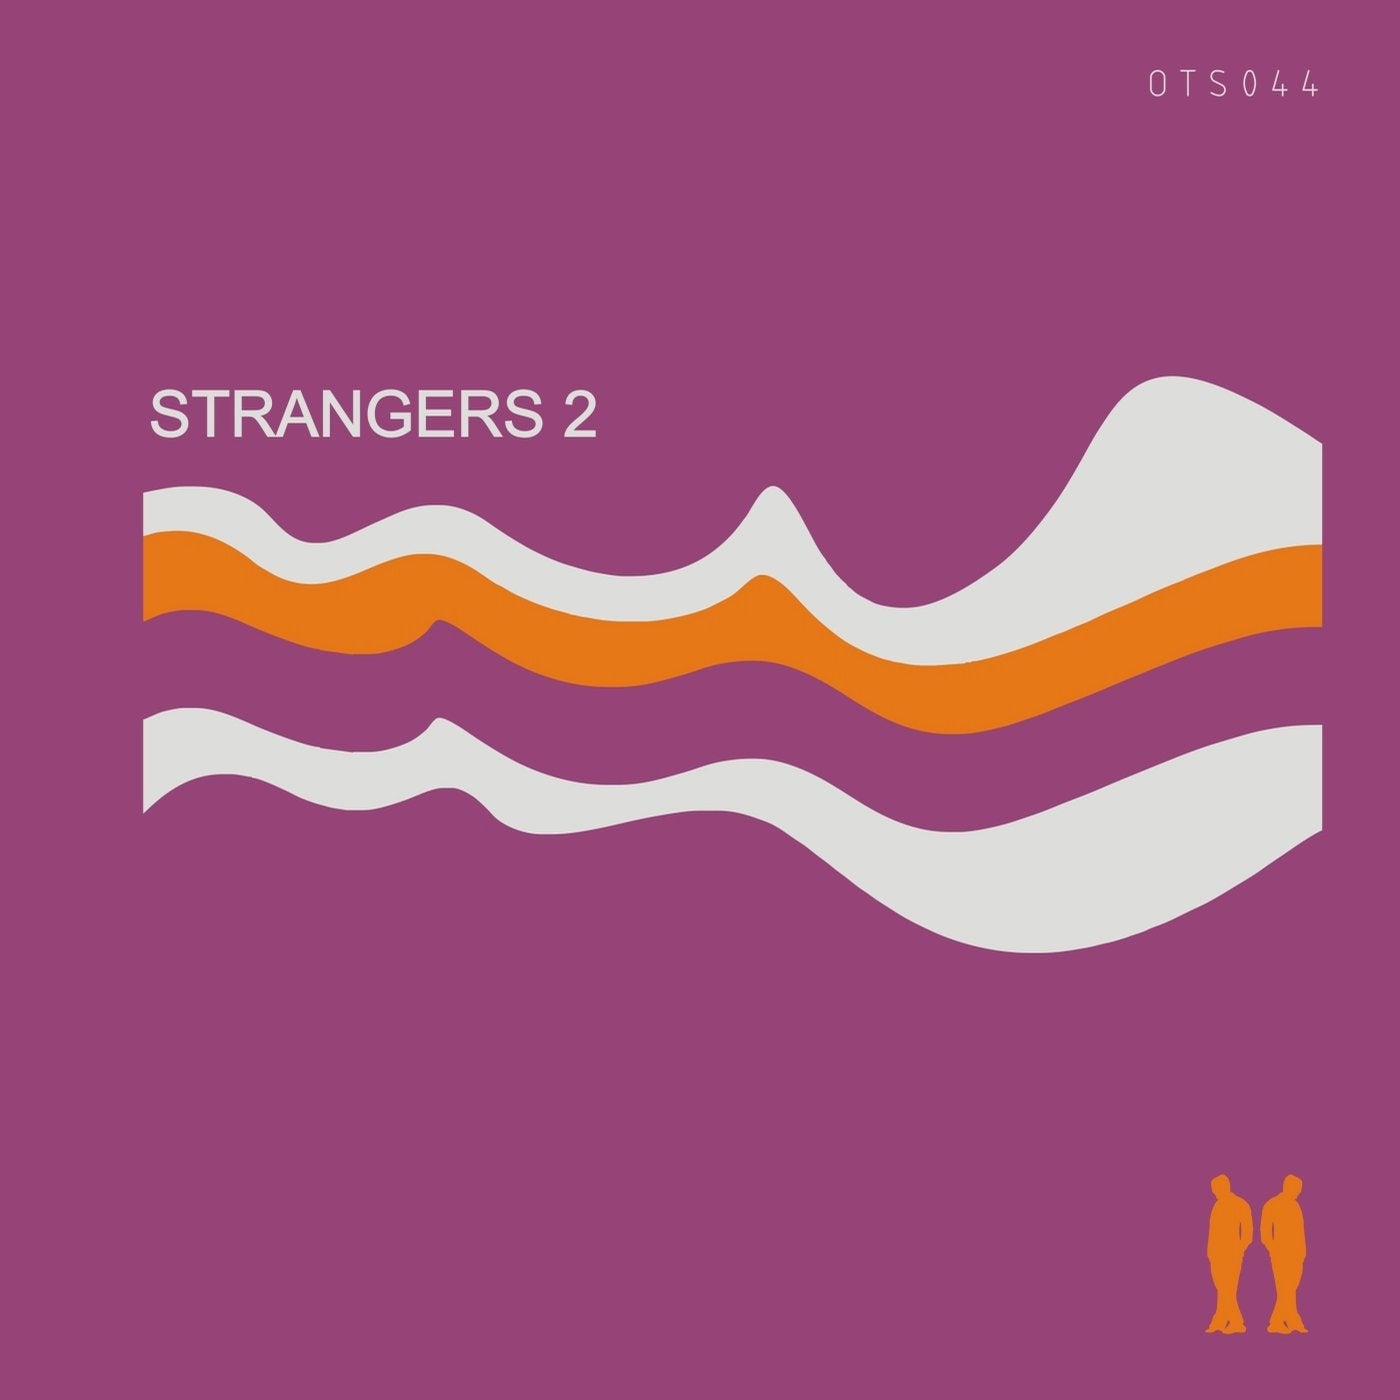 Strangers 2